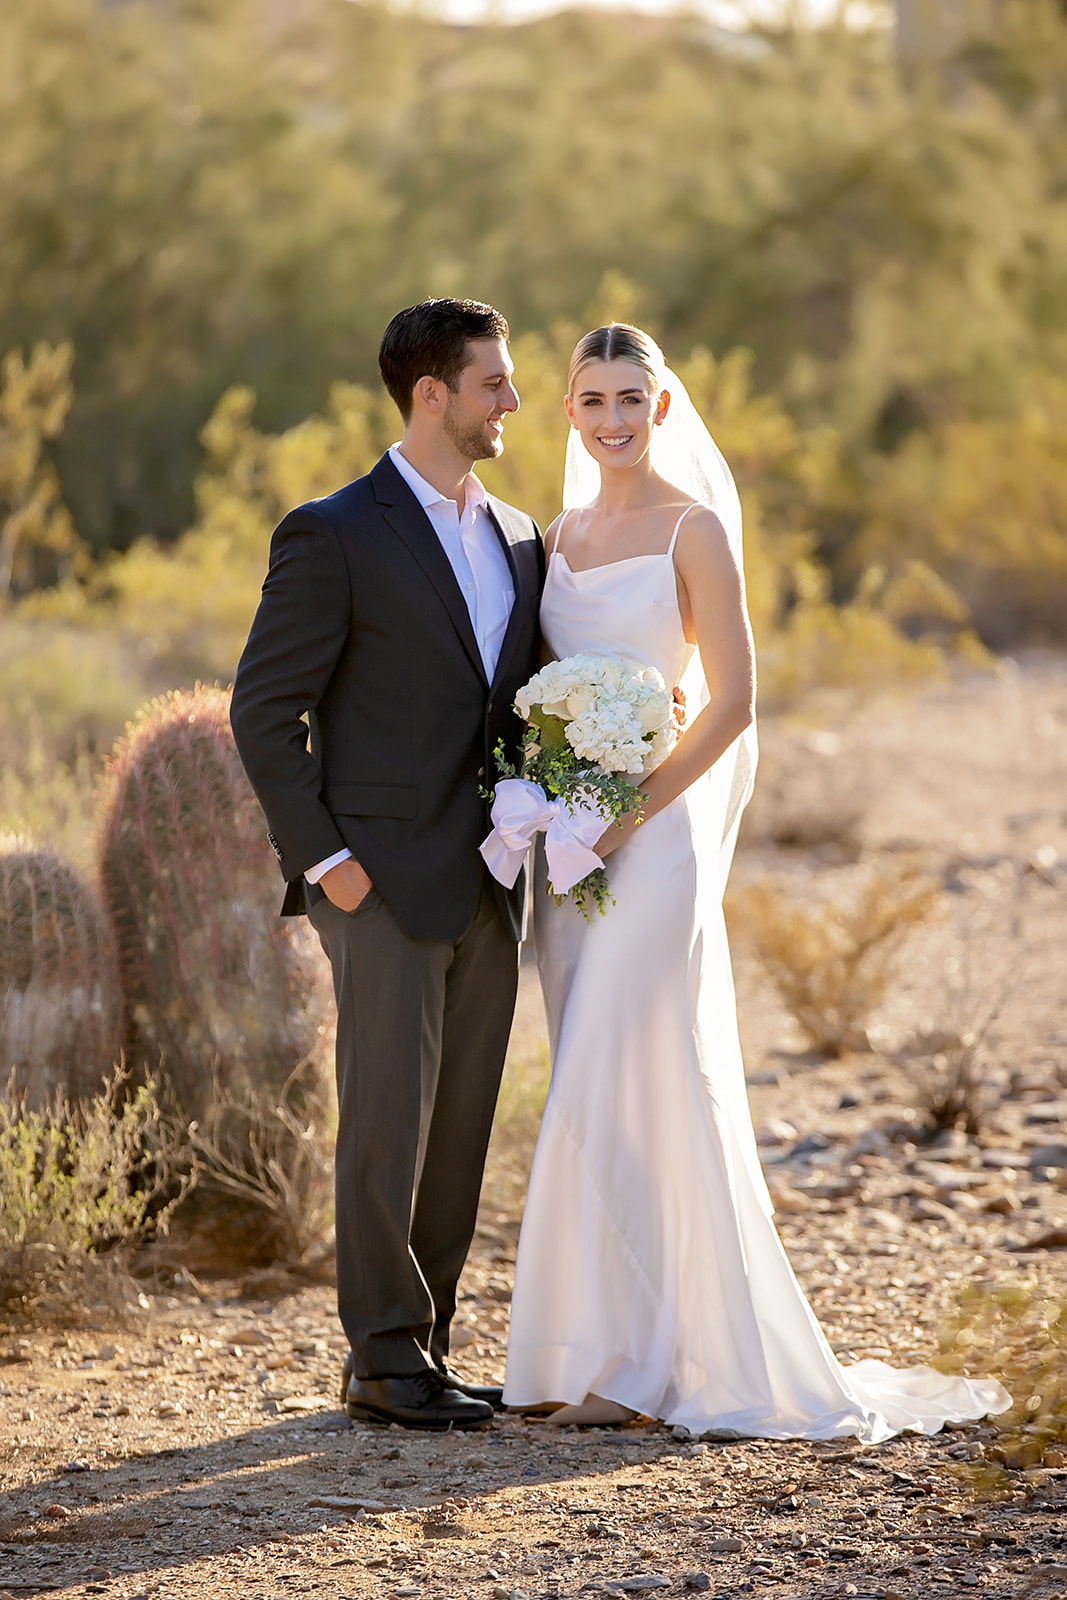 Lia's Photography - Phoenix Wedding Photographer